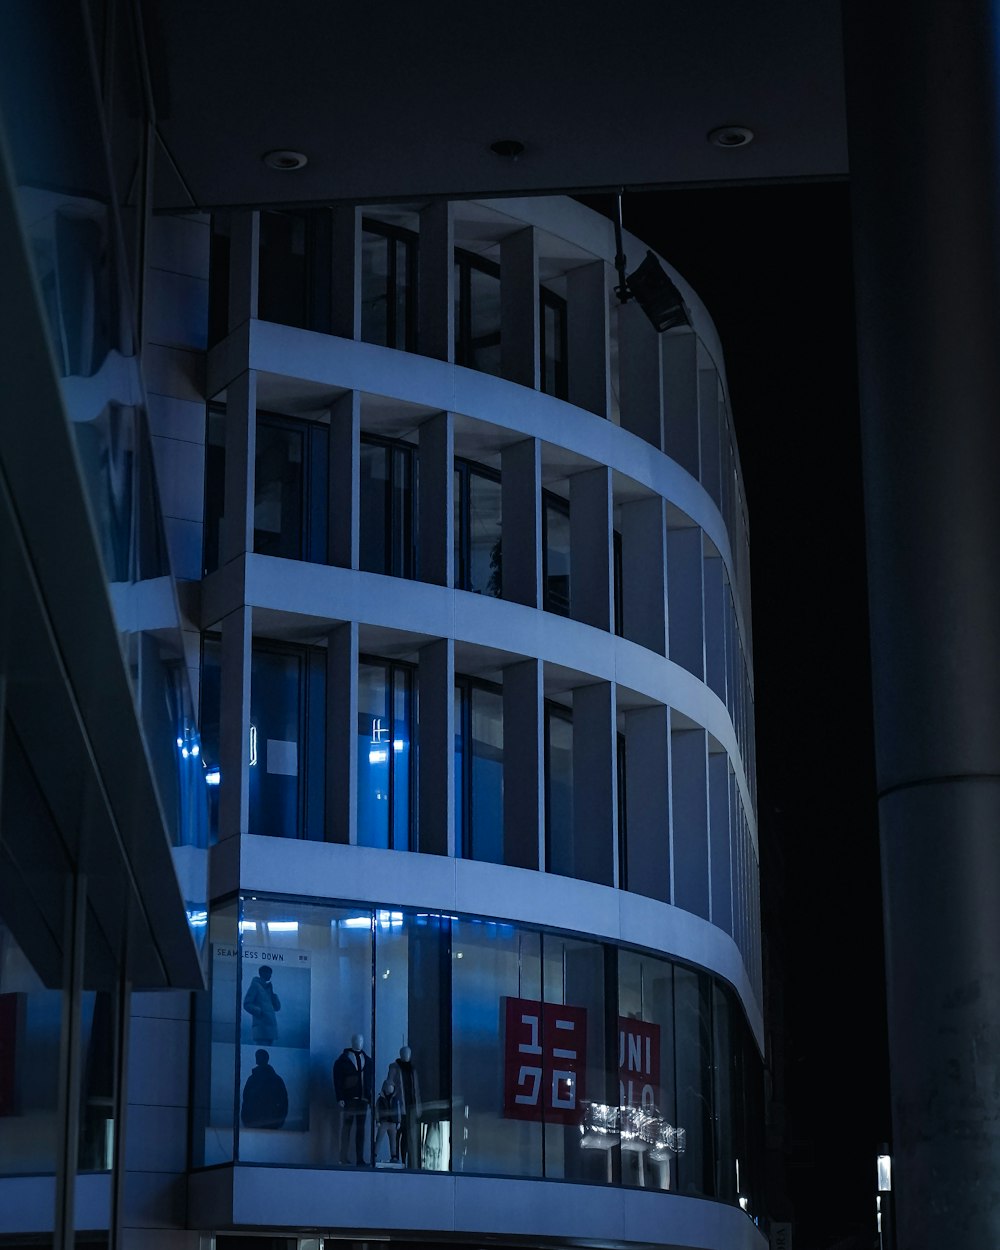 people walking on sidewalk near building during night time